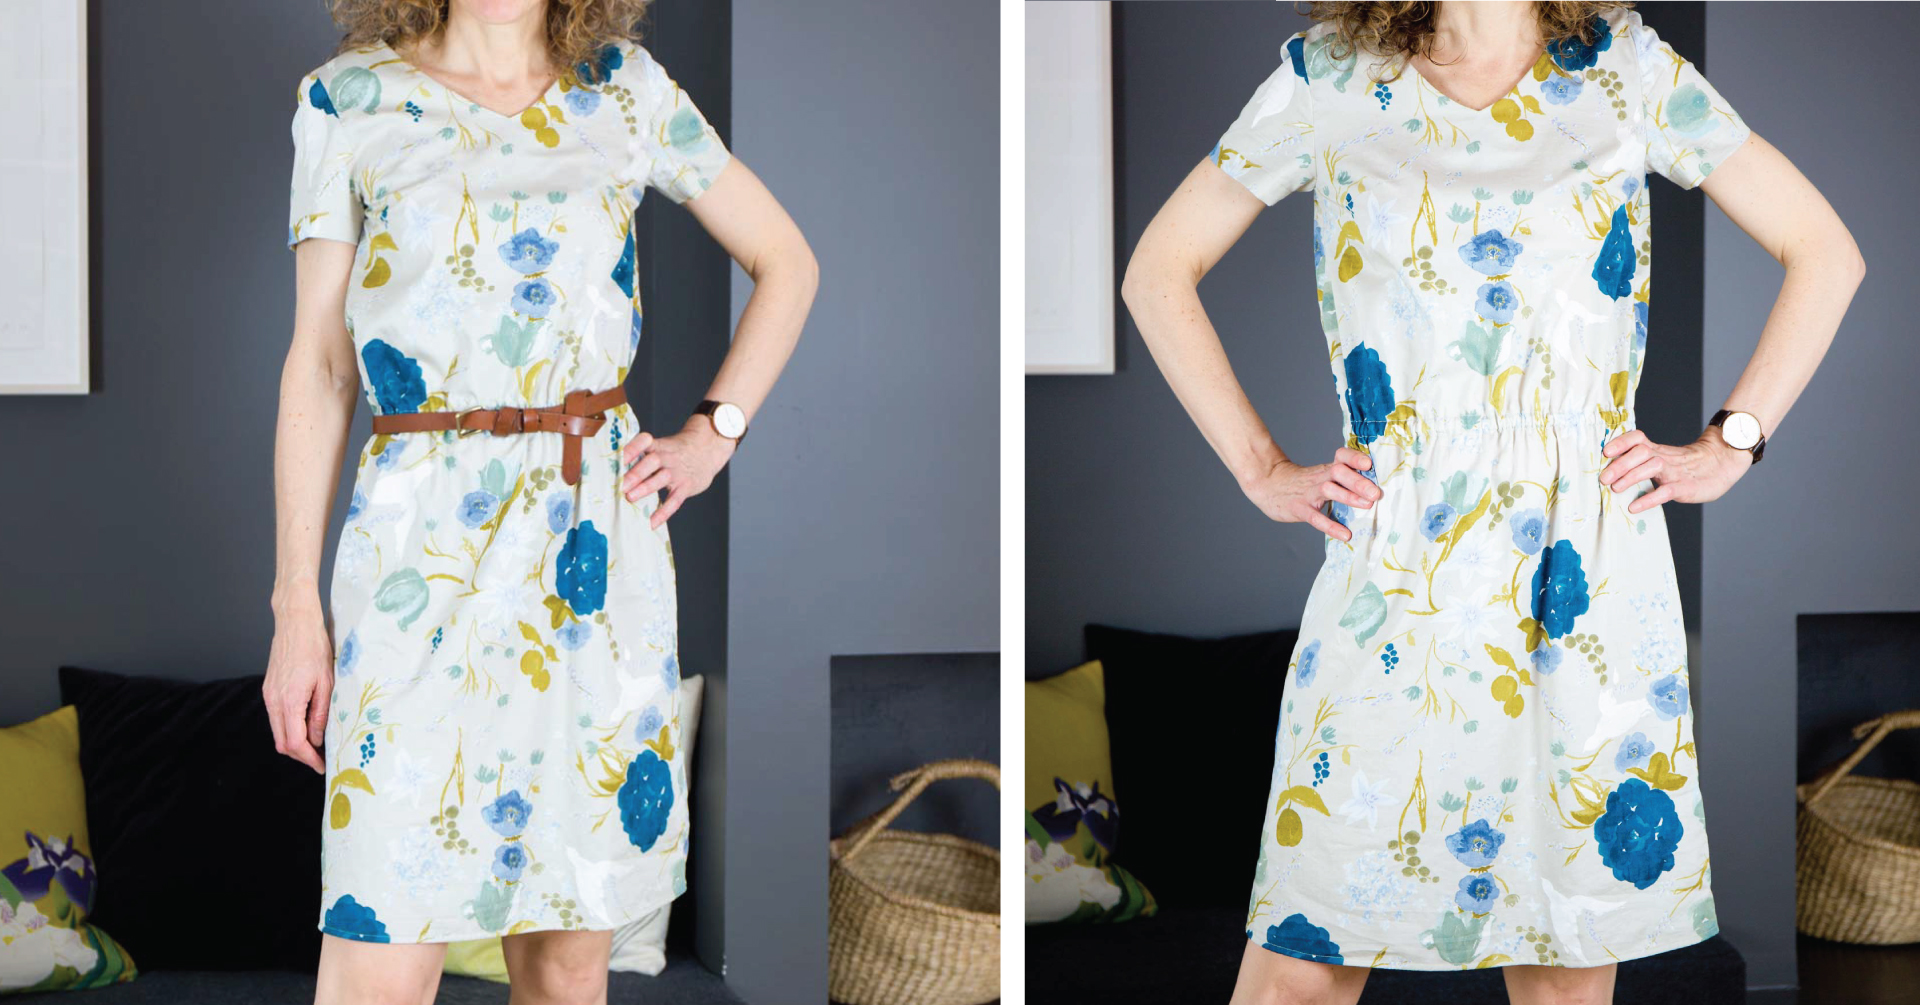 How to Sew an Elastic Waist Dress